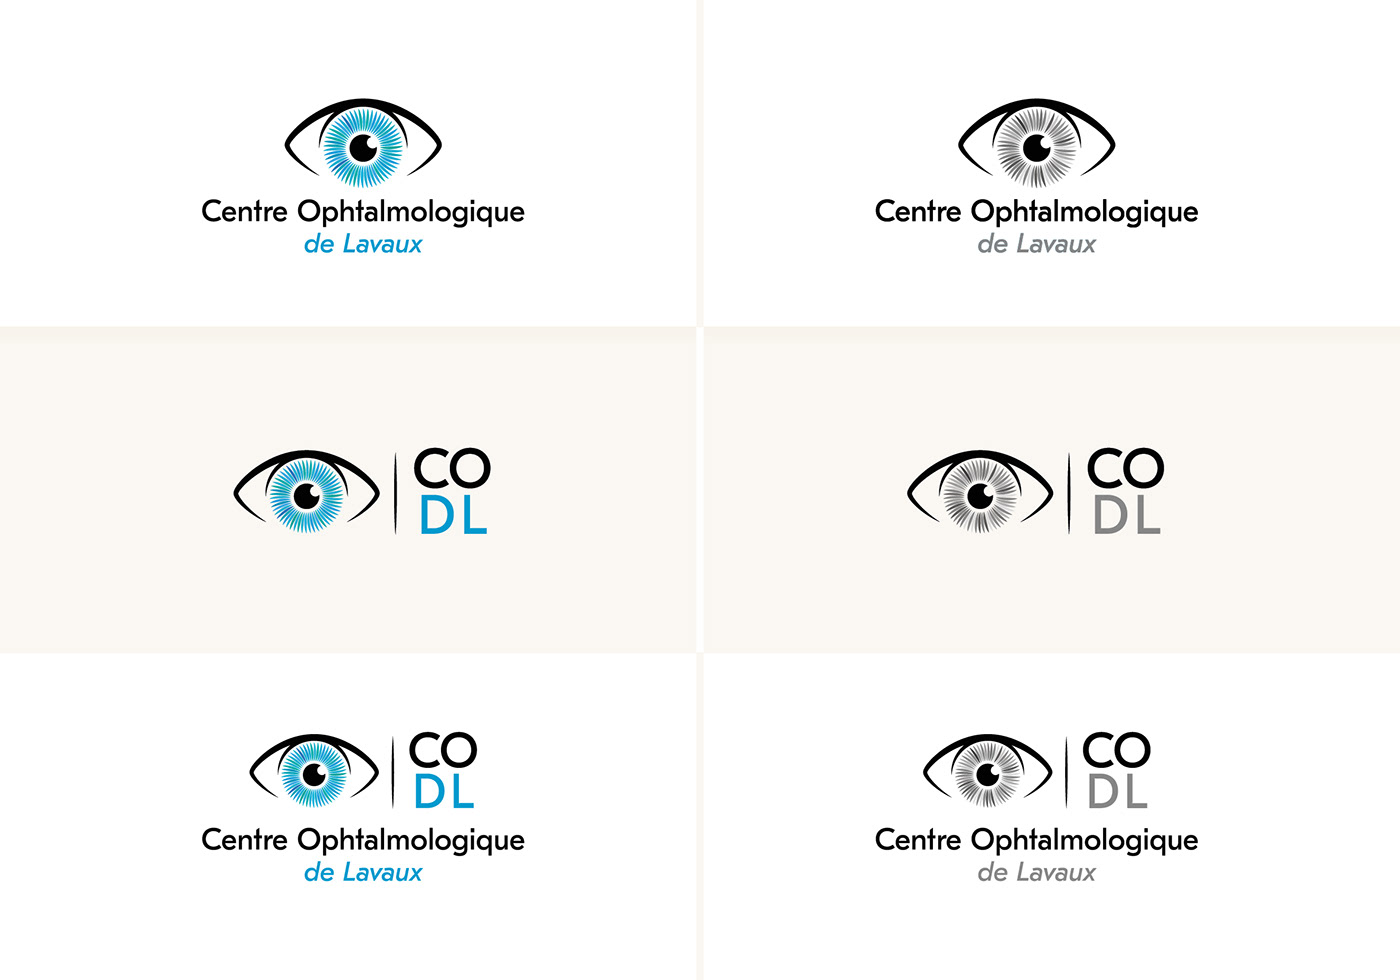 architecture blue buisness card eyes logo medical Office ophtalmology Signage Website